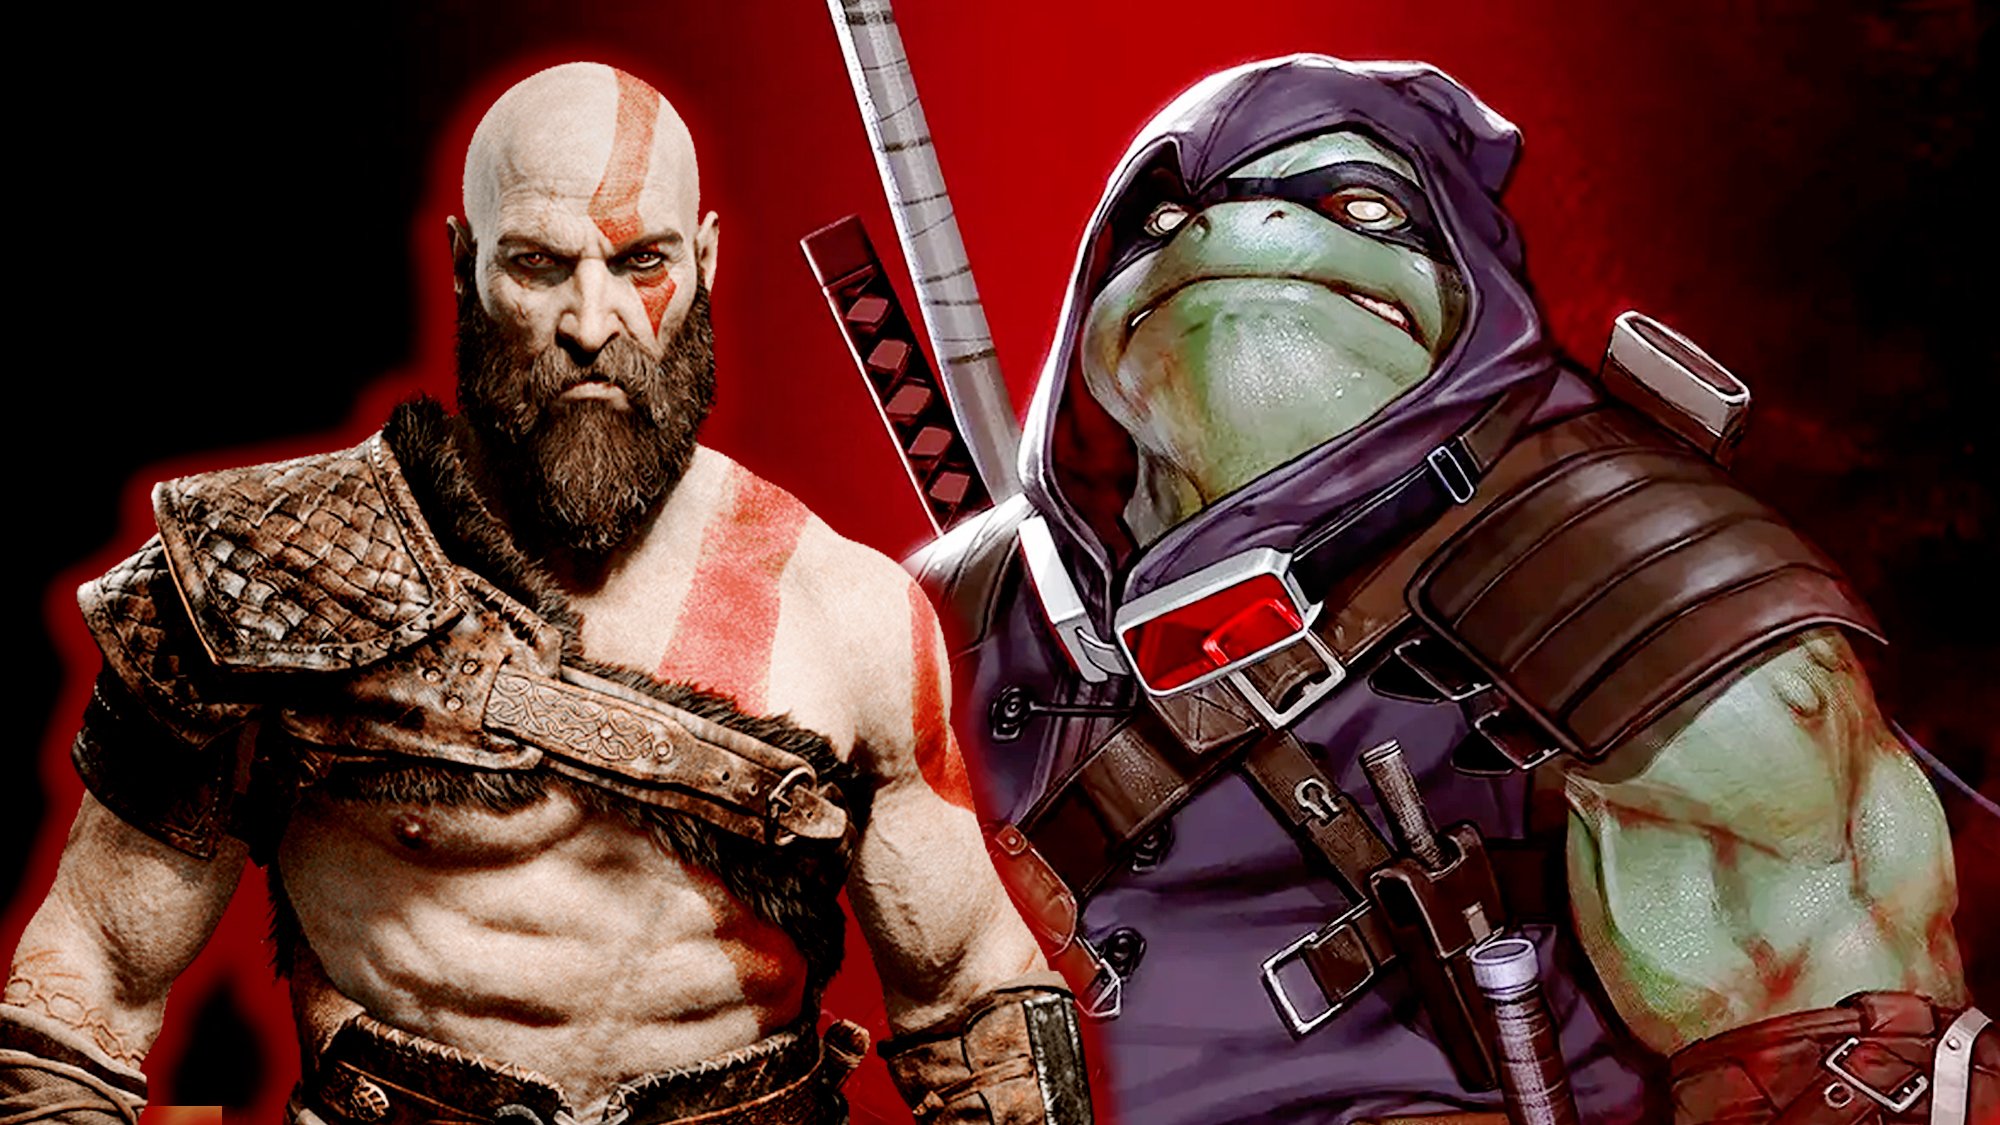 Tortues Ninja : un énorme jeu à la God of War annoncé